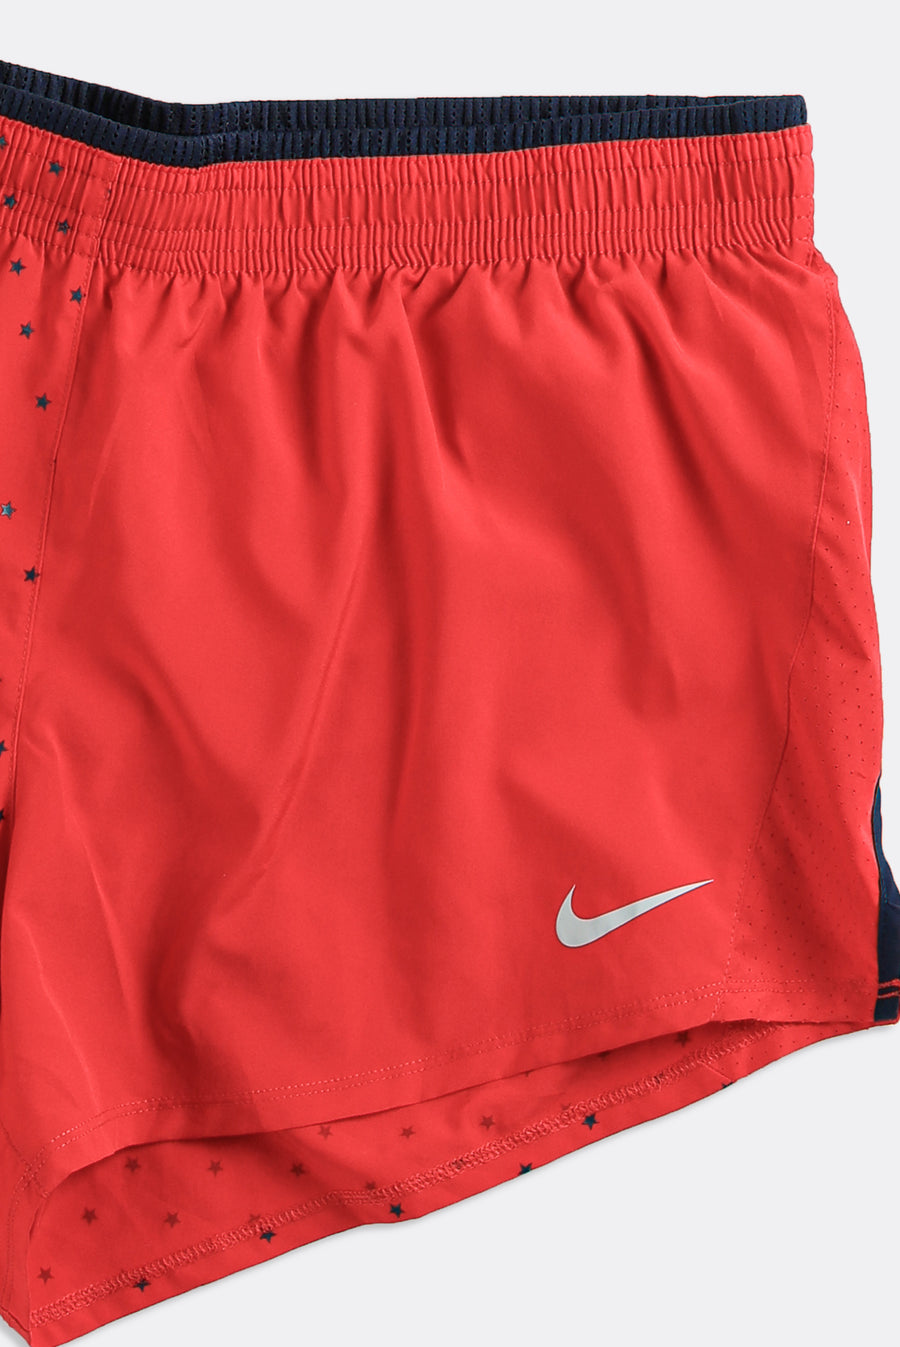 Vintage Nike Shorts - XL